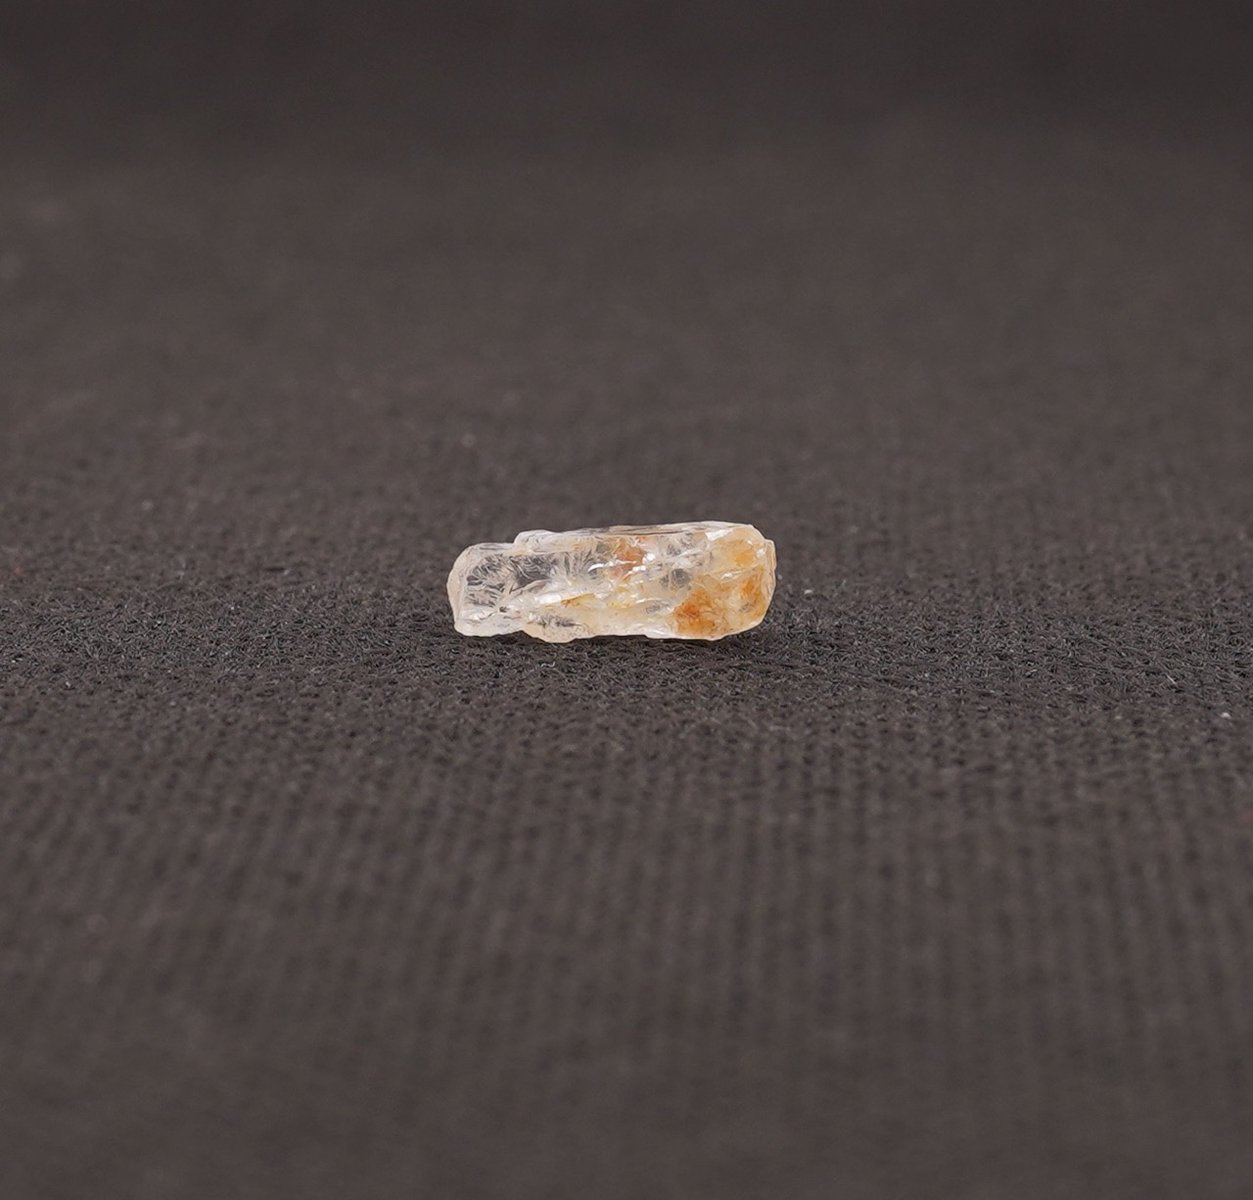 Fenacit nigerian cristal natural unicat f249